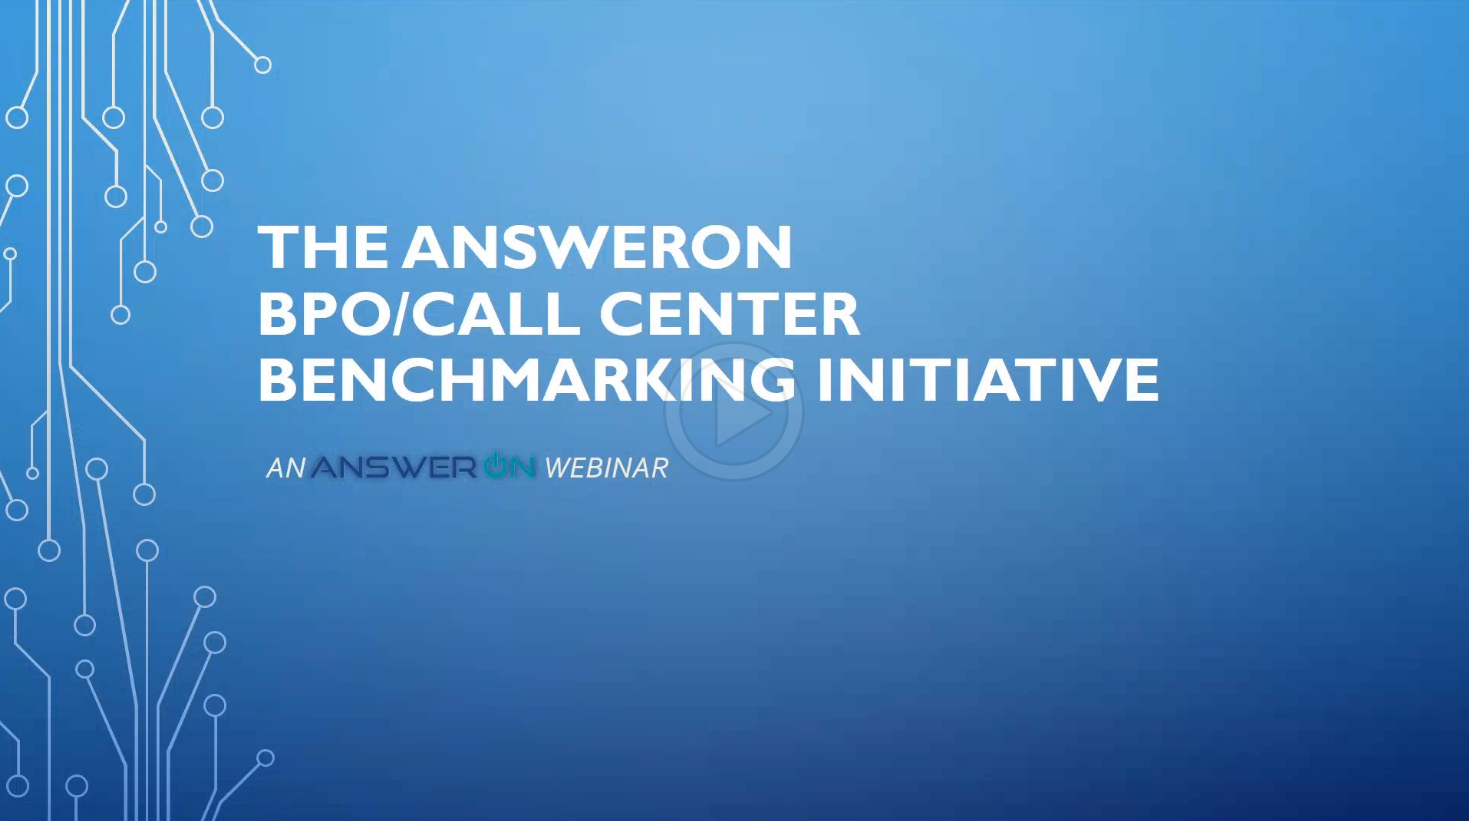 The AnswerOn BPO/Call Center Benchmarking Initiative